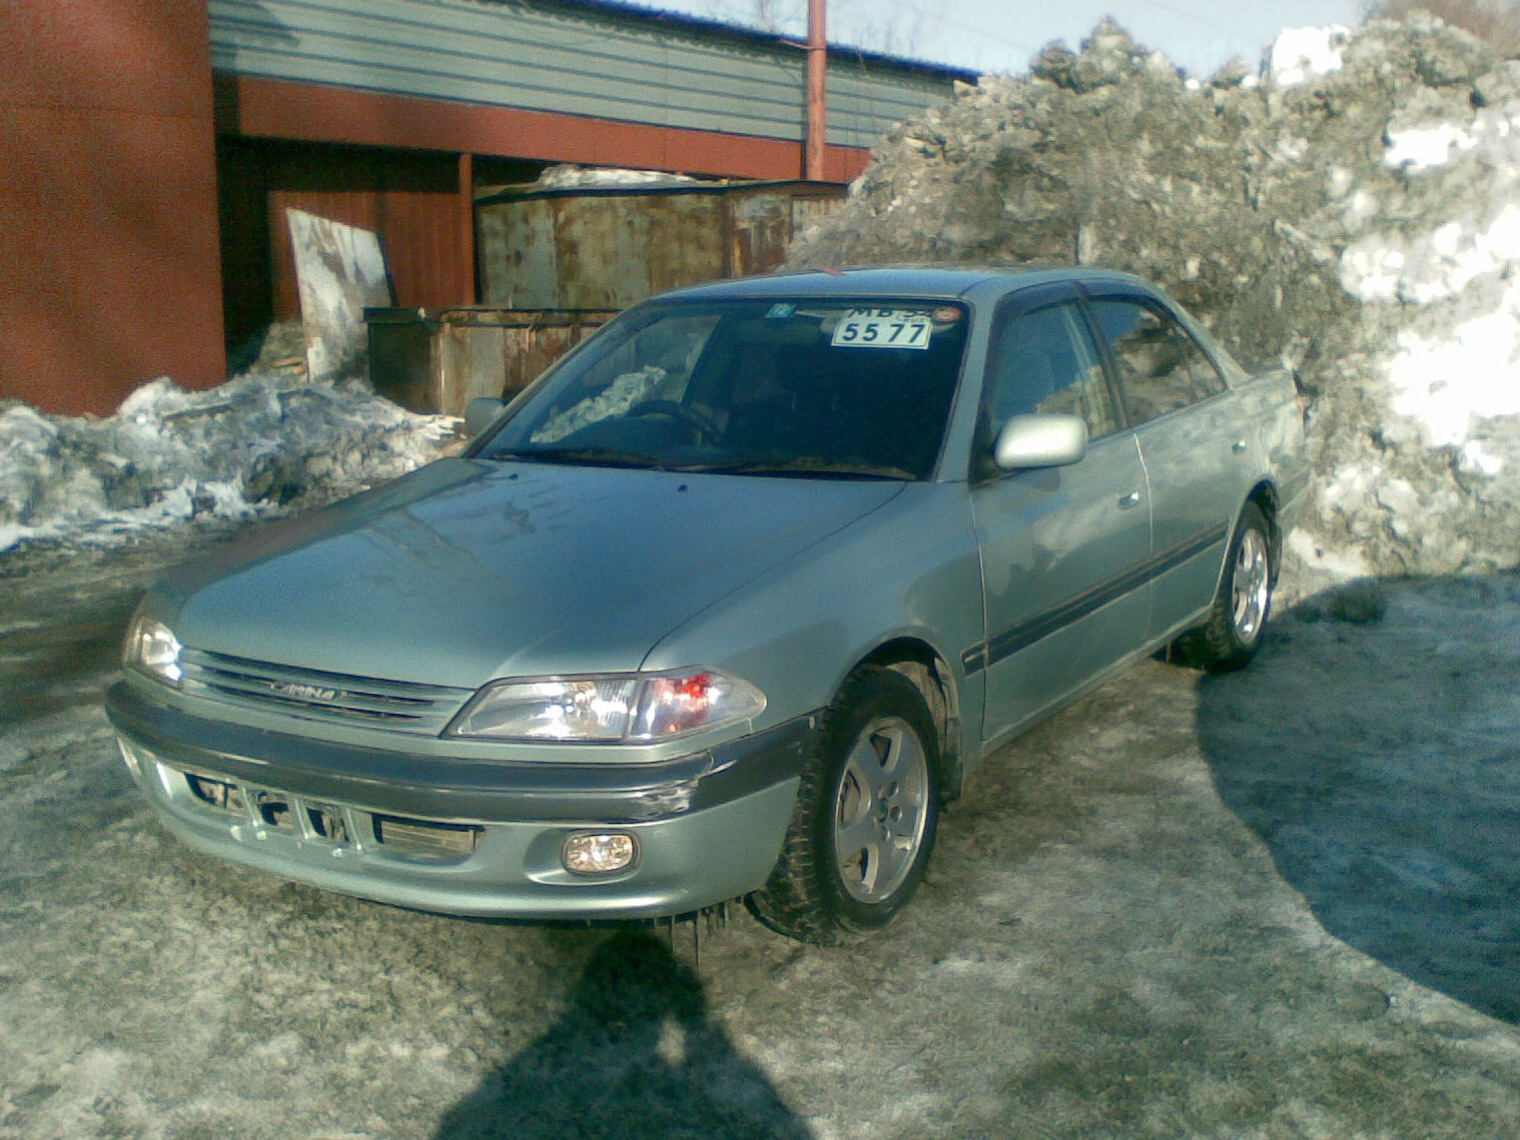 Washed - Toyota Carina 18 L 1996